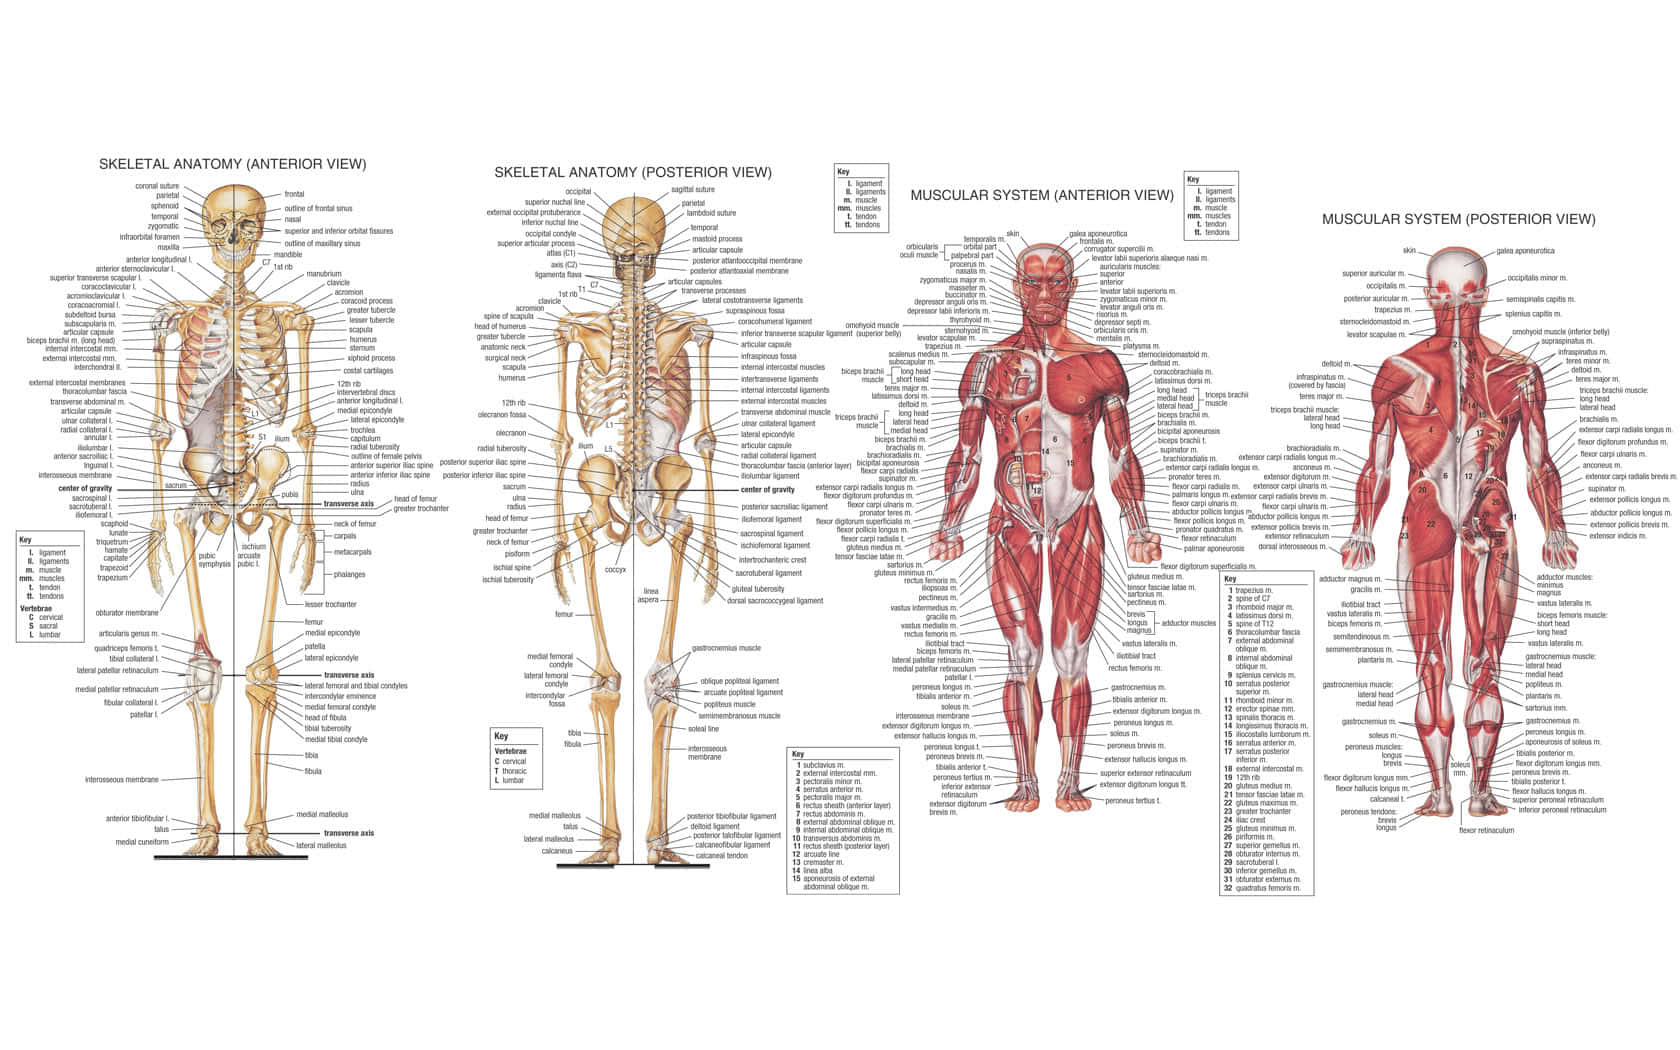 Human Anatomy Skeletaland Muscular Systems Wallpaper